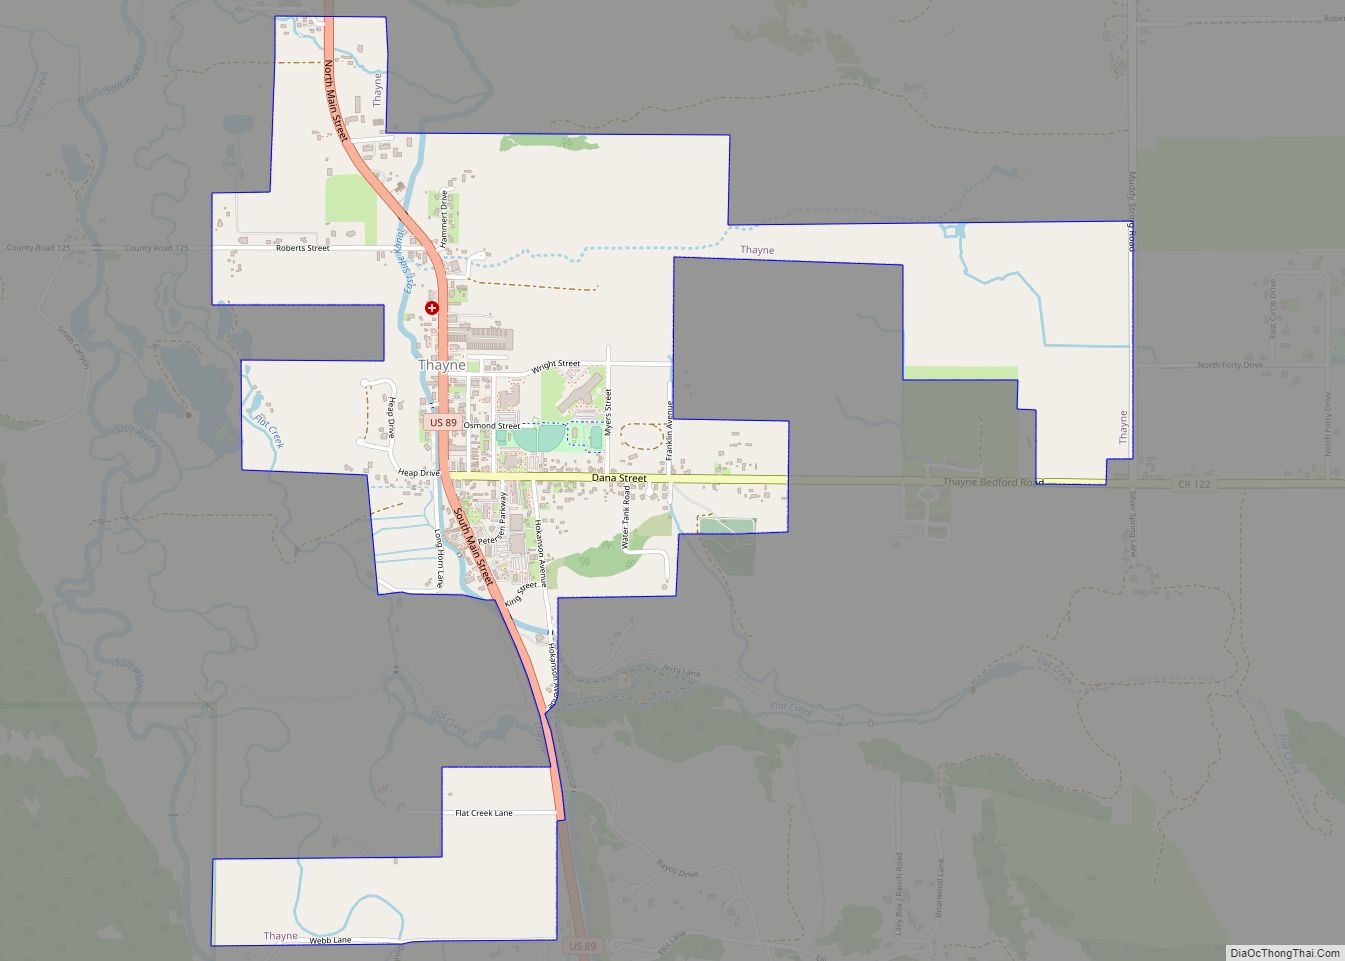 Map of Thayne town